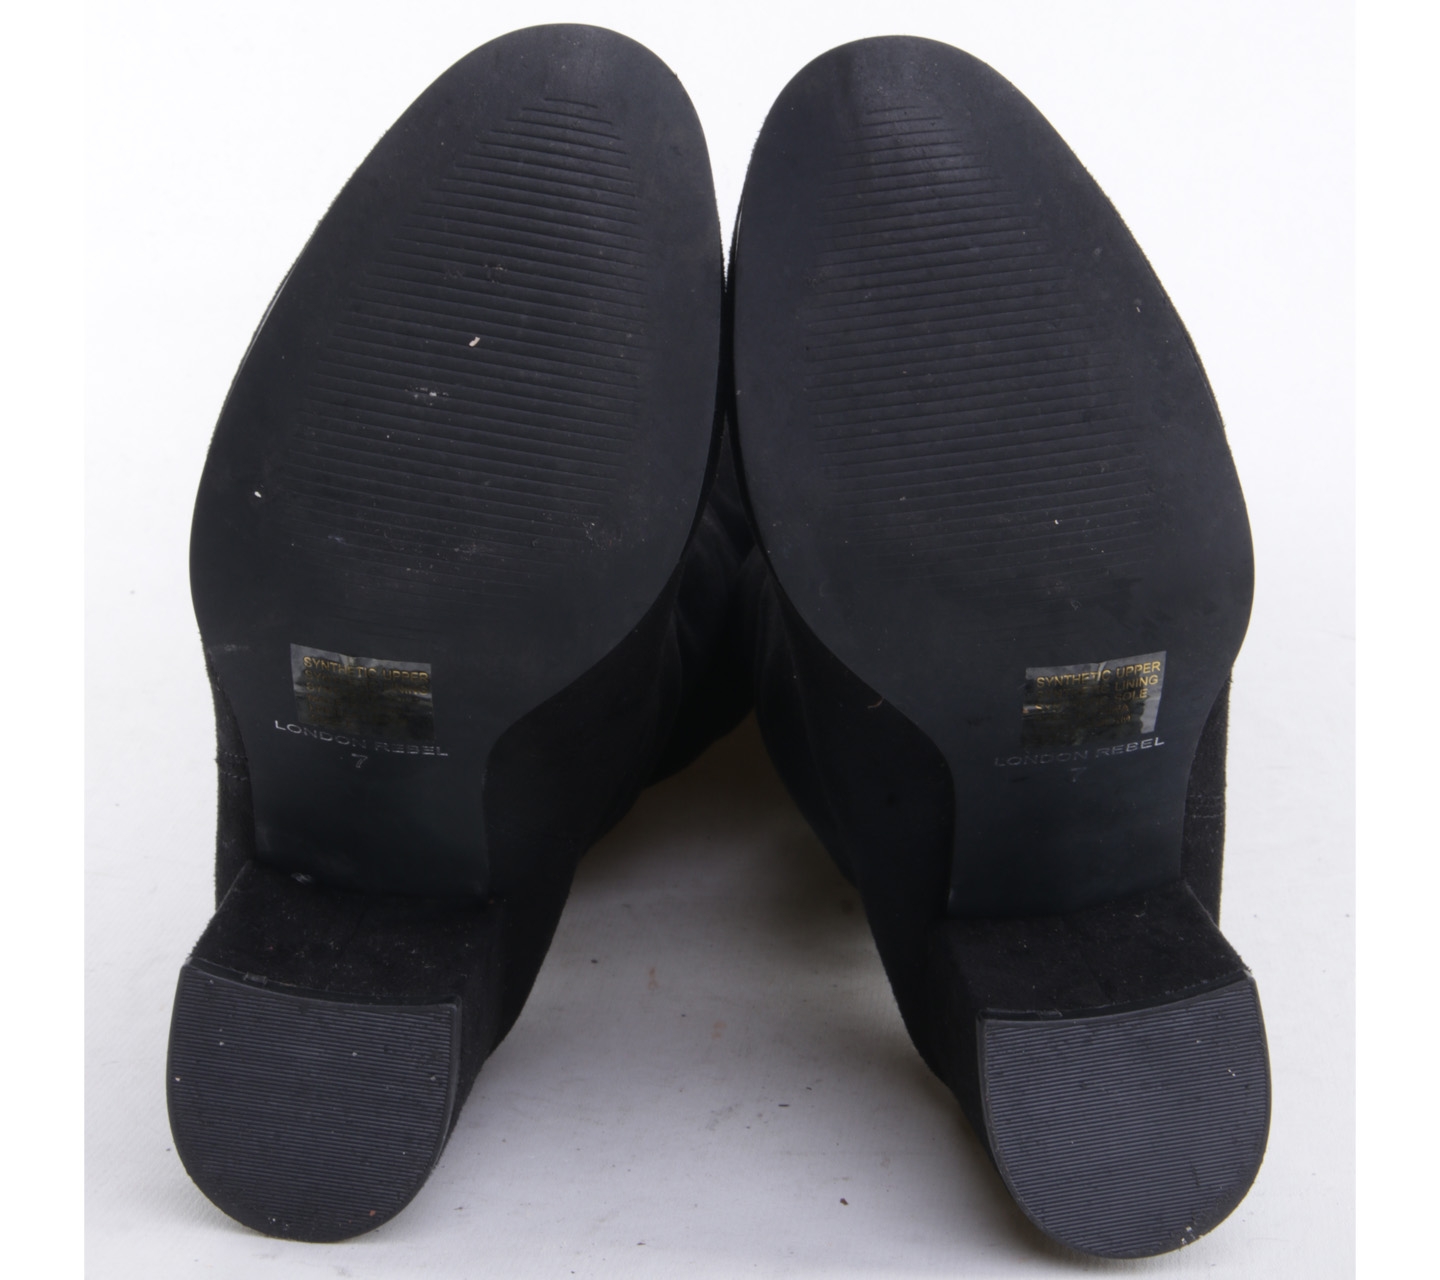 Londo Rebel Black Suede High Heels Boots